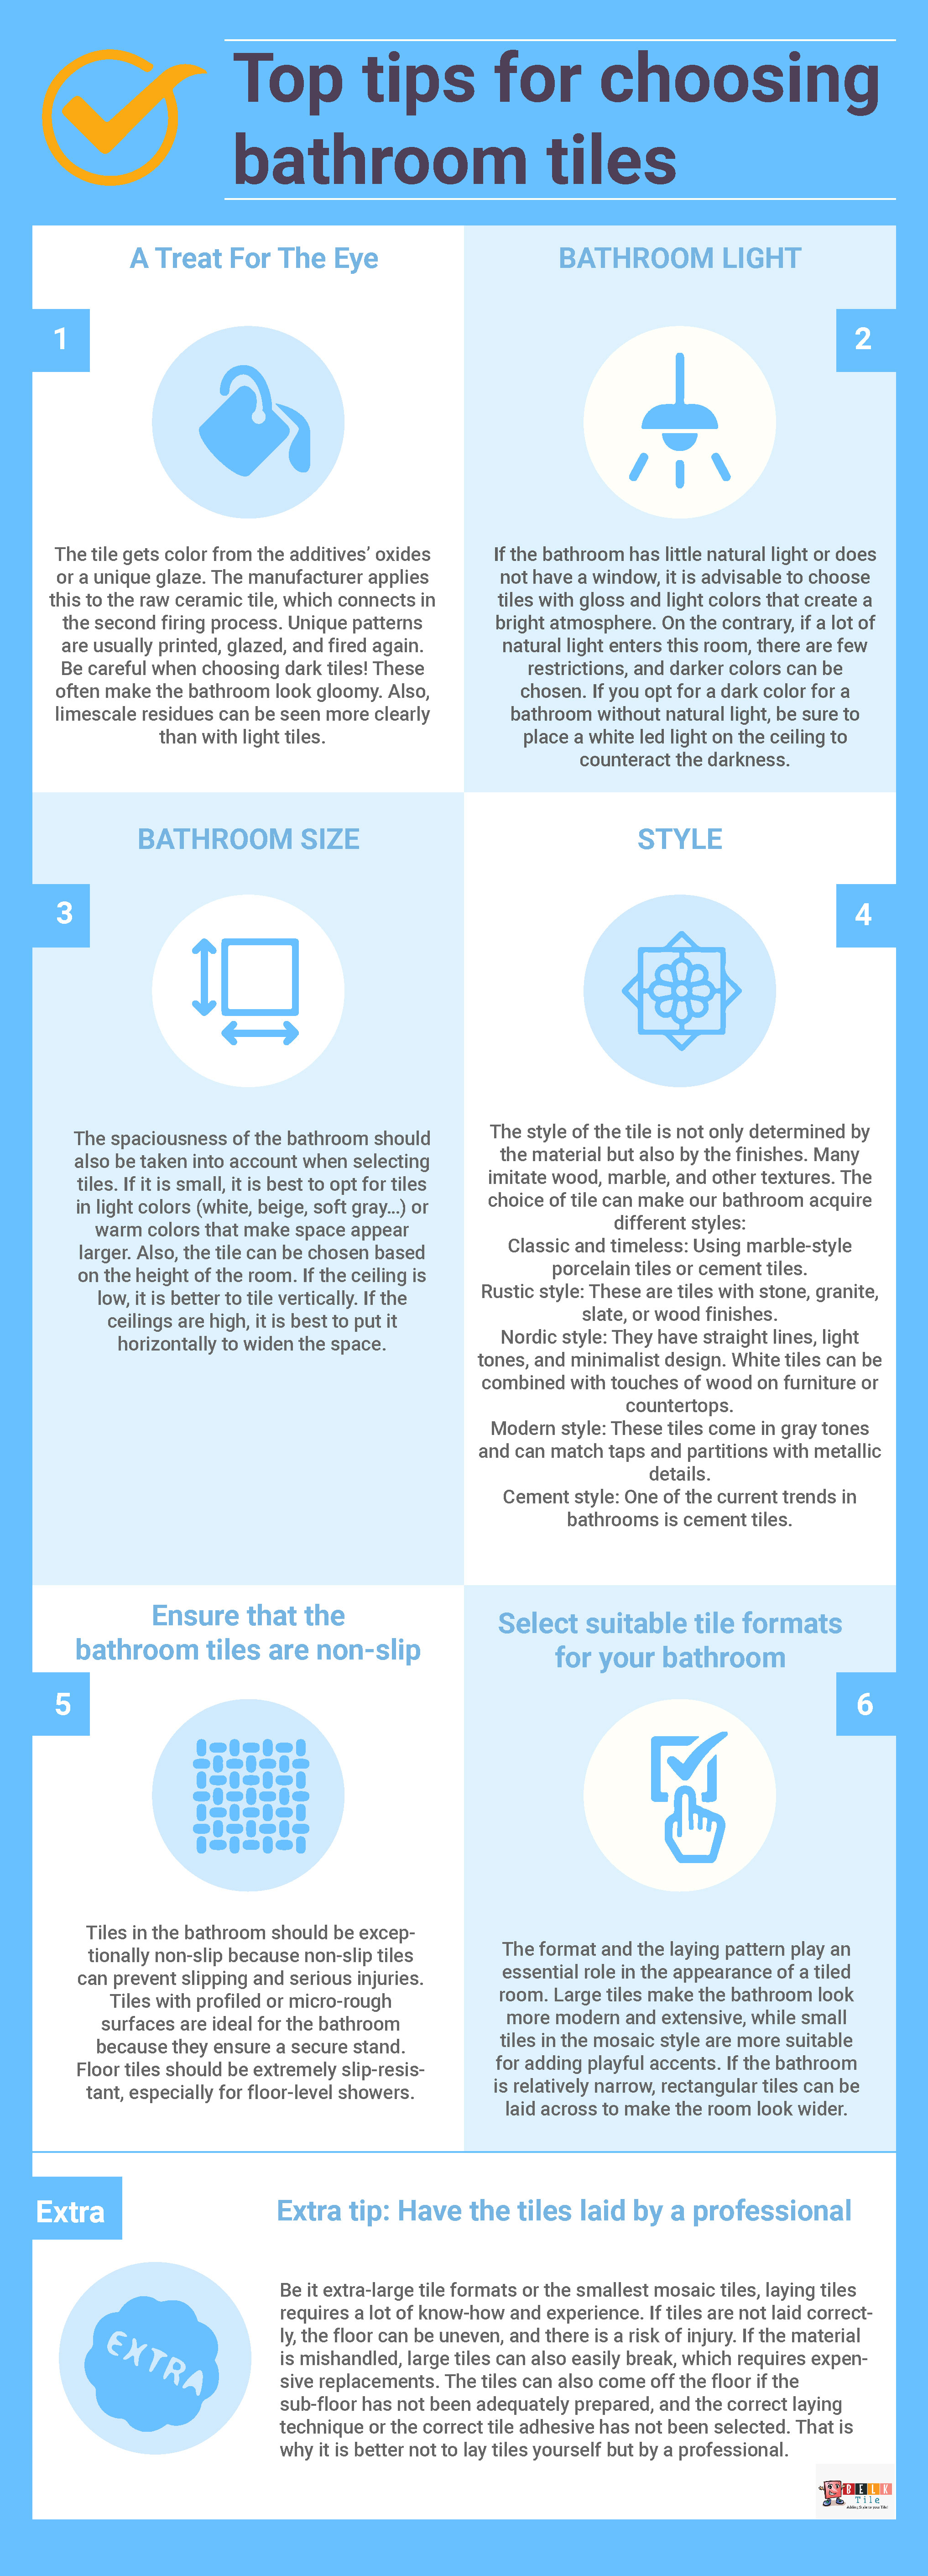 Top Tips For Choosing Bathroom Tiles Infographic